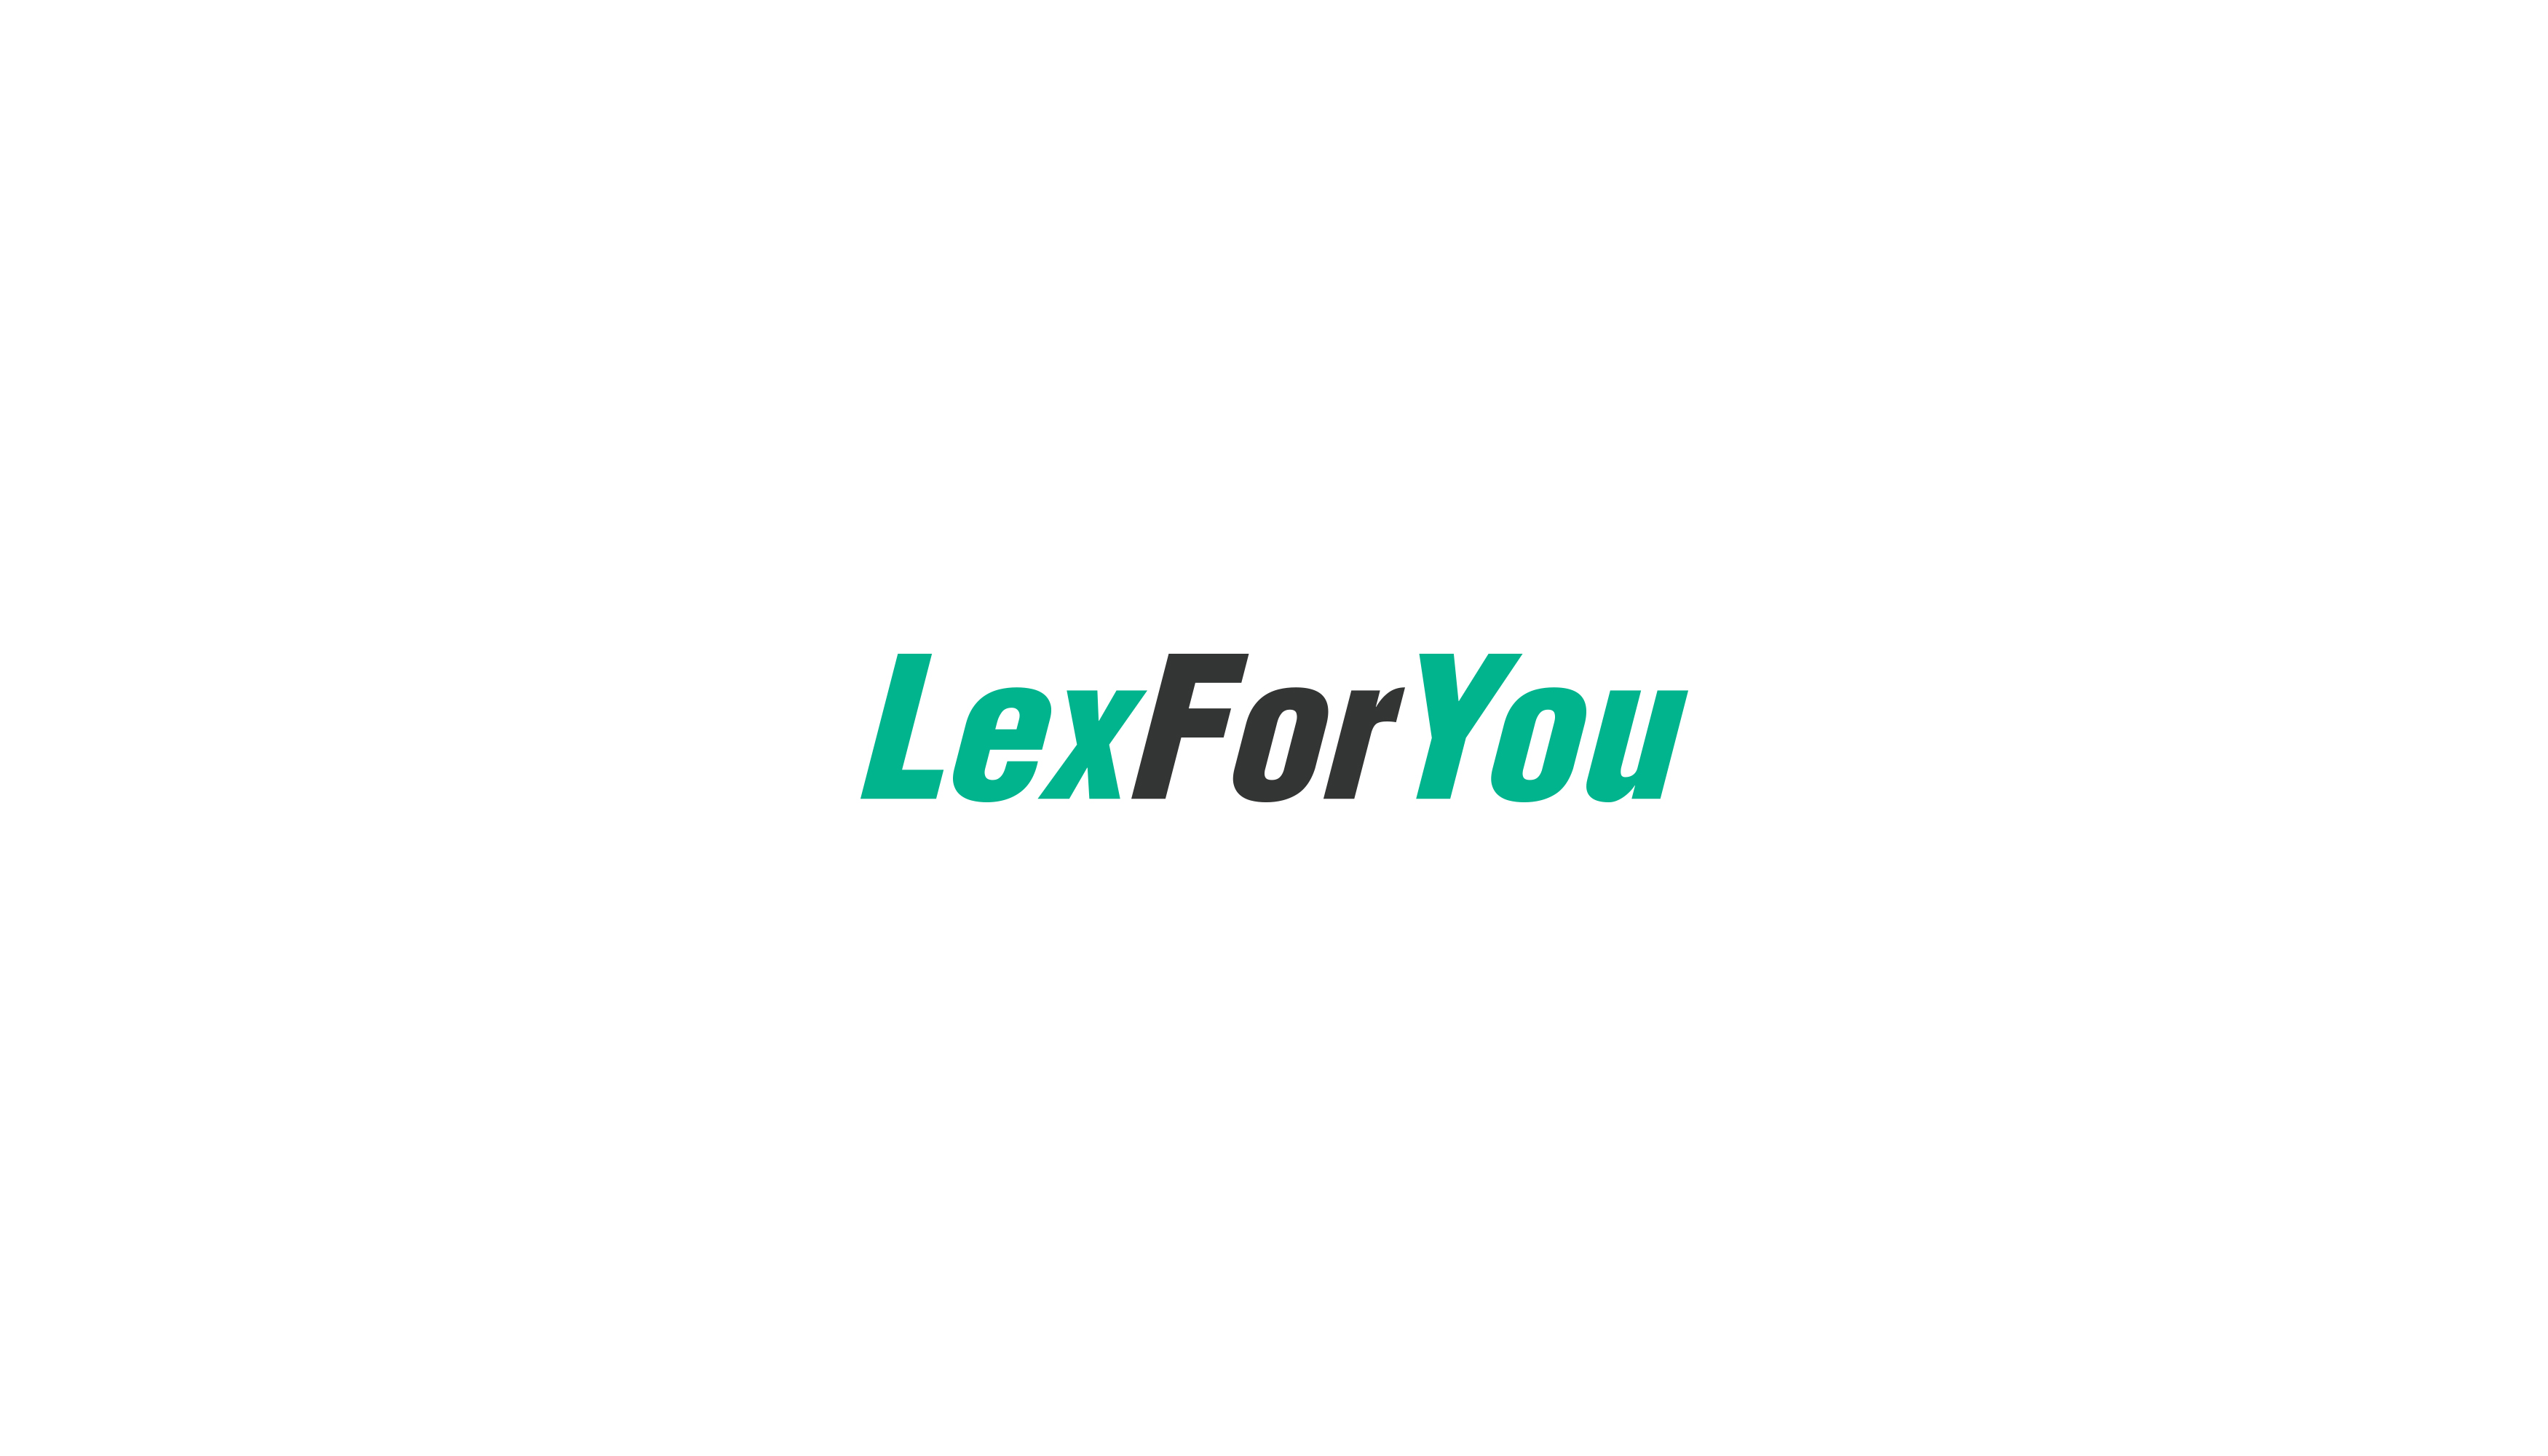 LexForYou Design #10